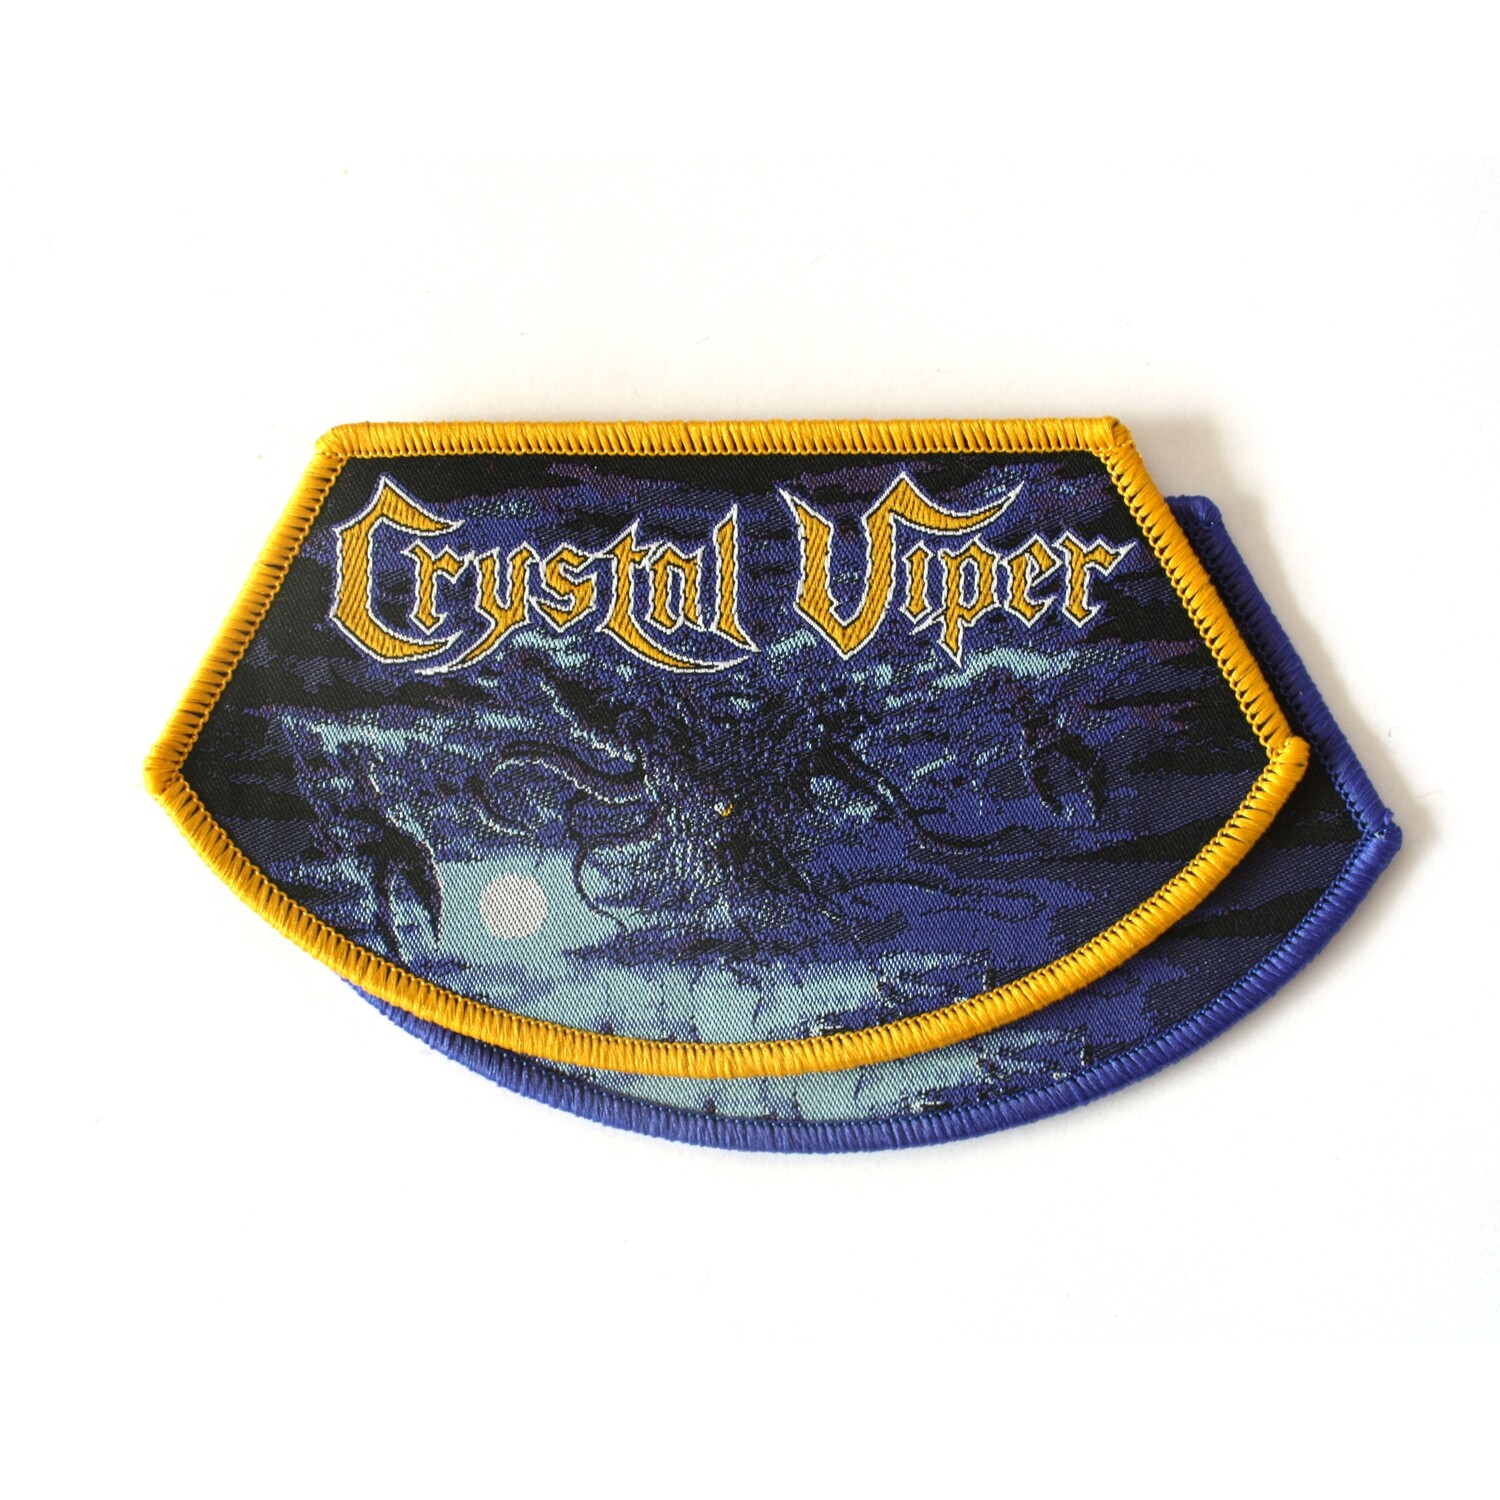 Crystal Viper - The Cult